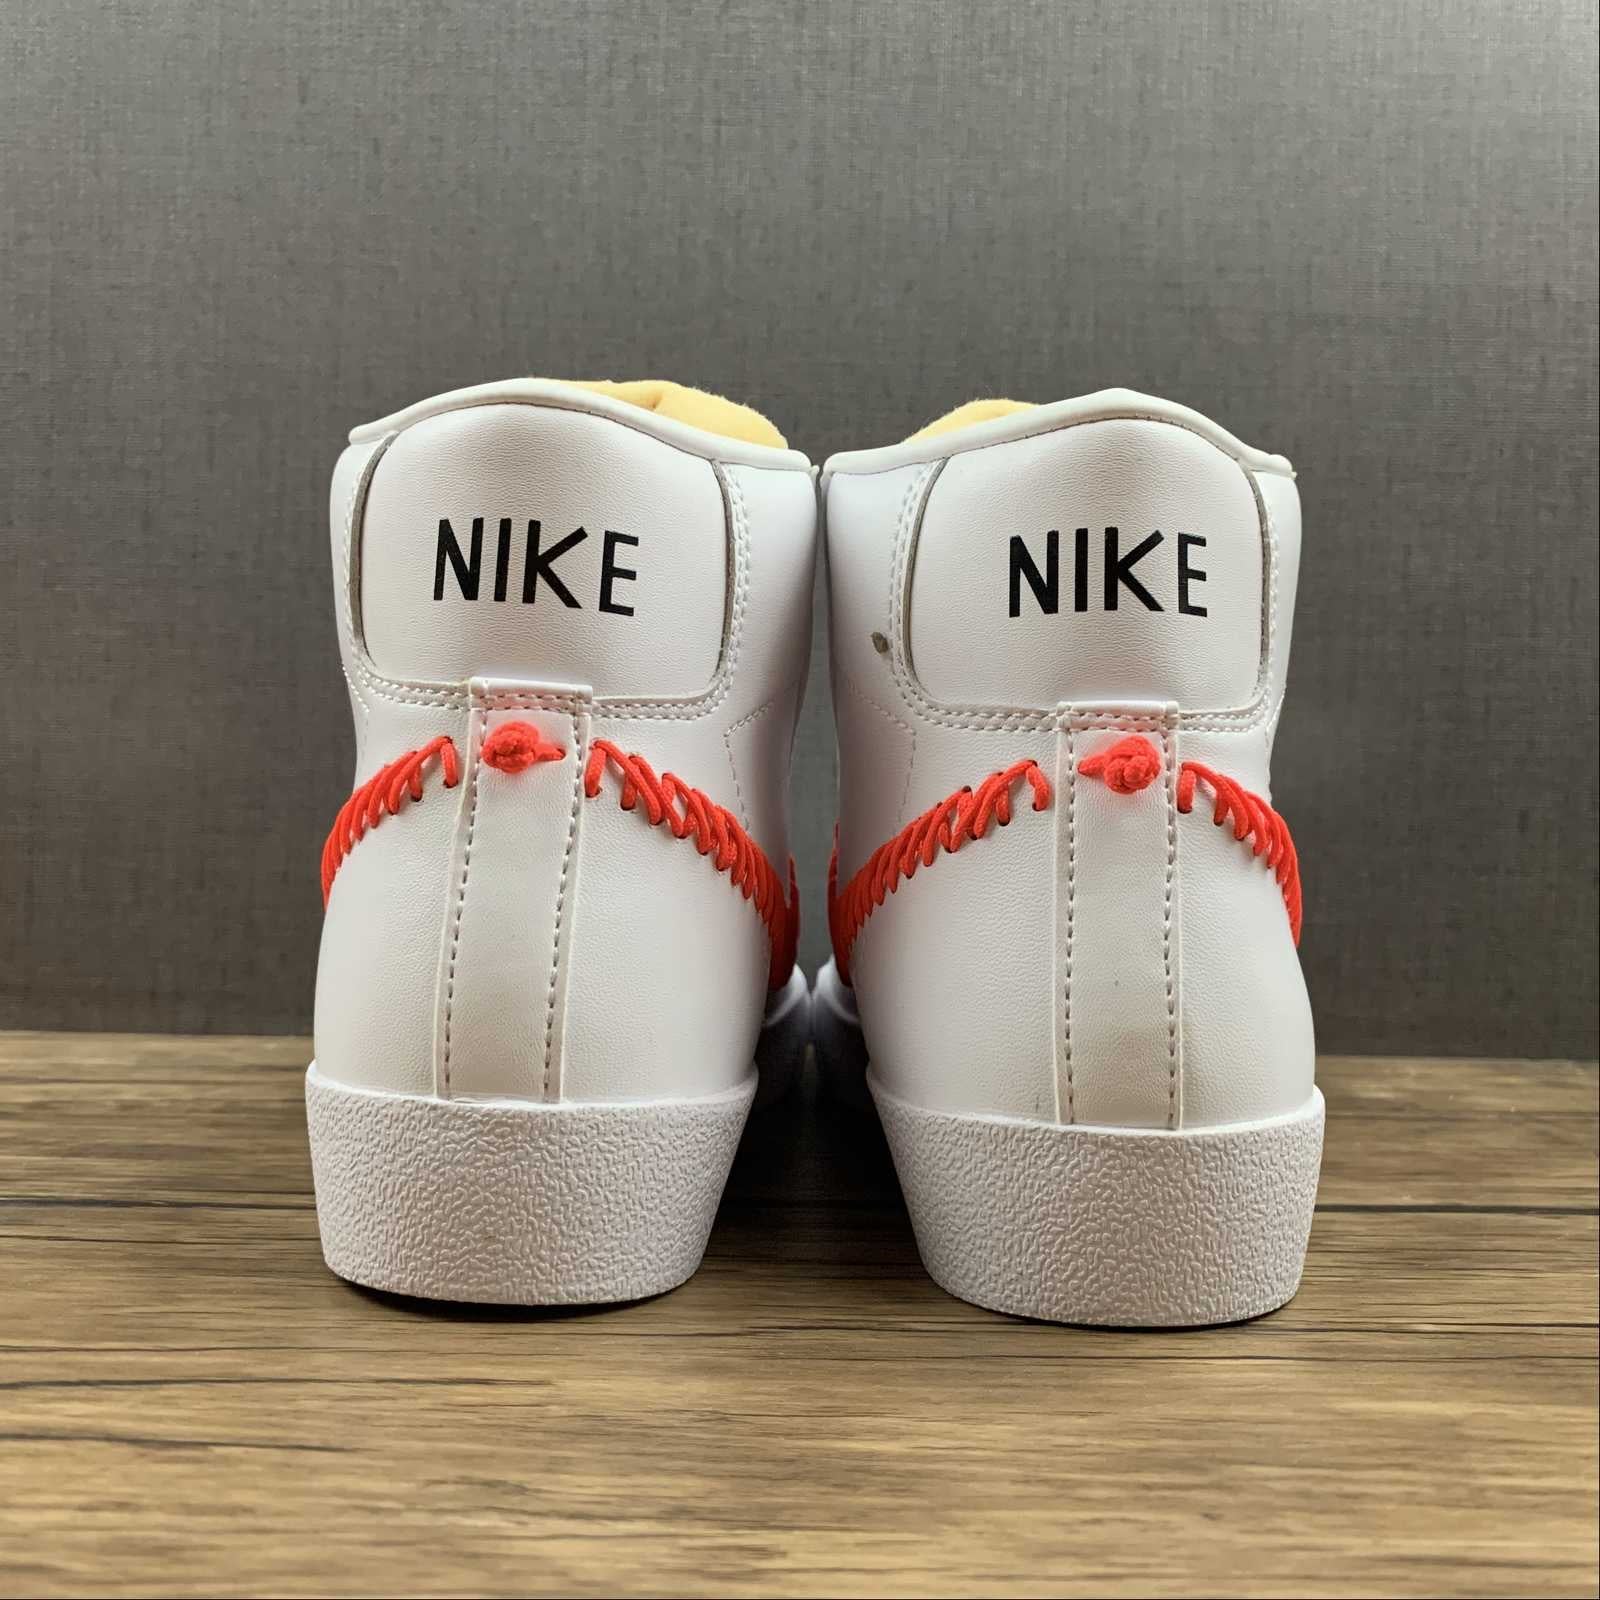 Nike blazer high embroidered orange